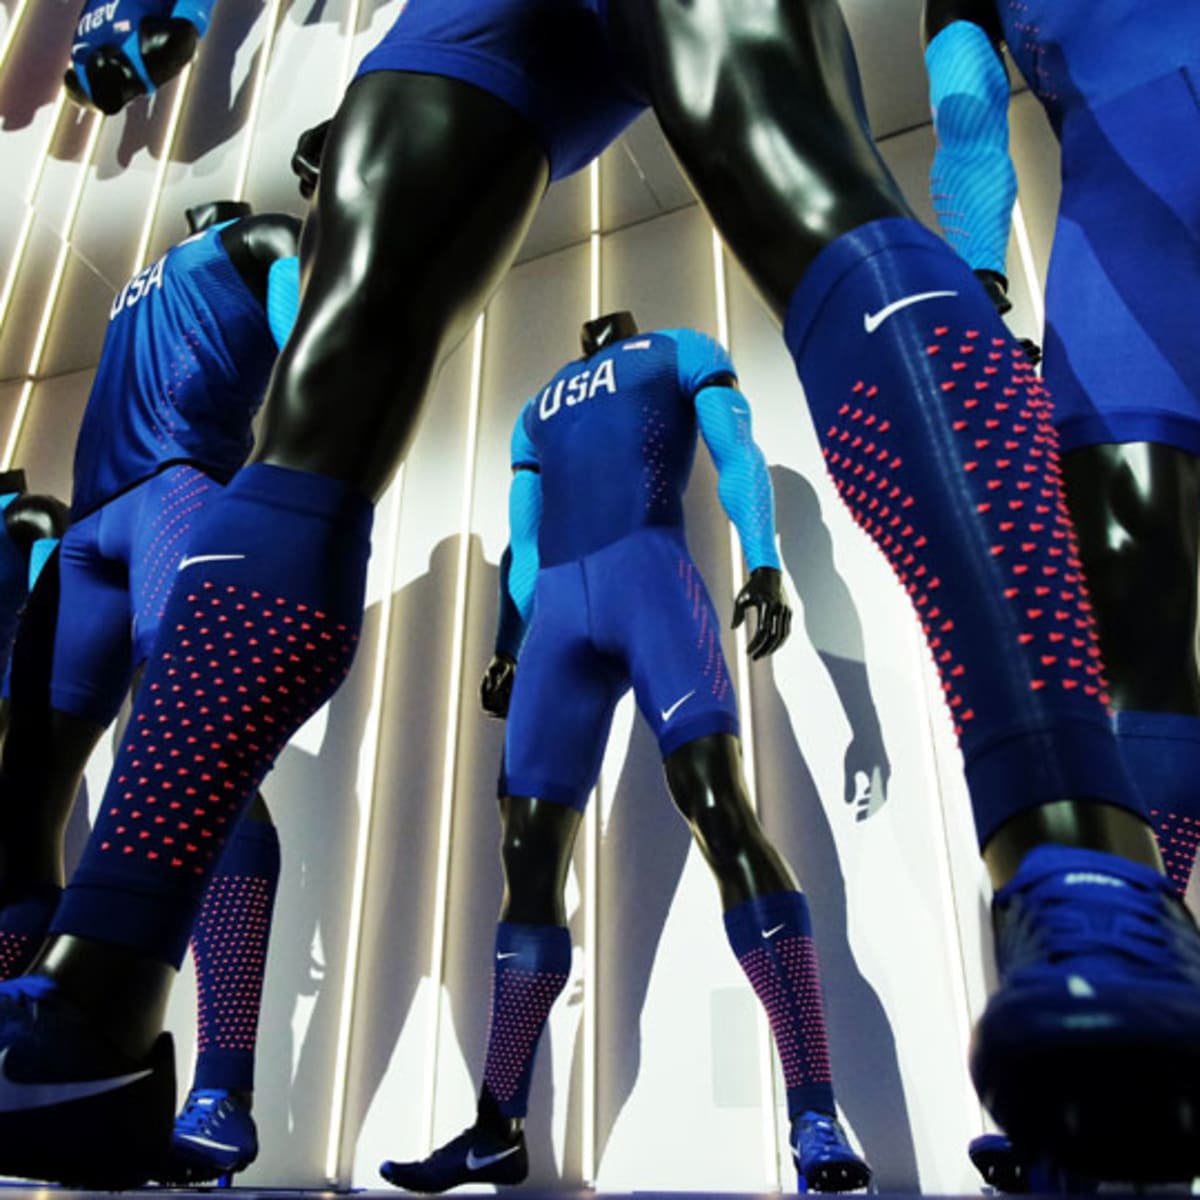 fragancia hazlo plano Centro de niños Olympics 2016: Team USA track uniforms unveiled - Sports Illustrated